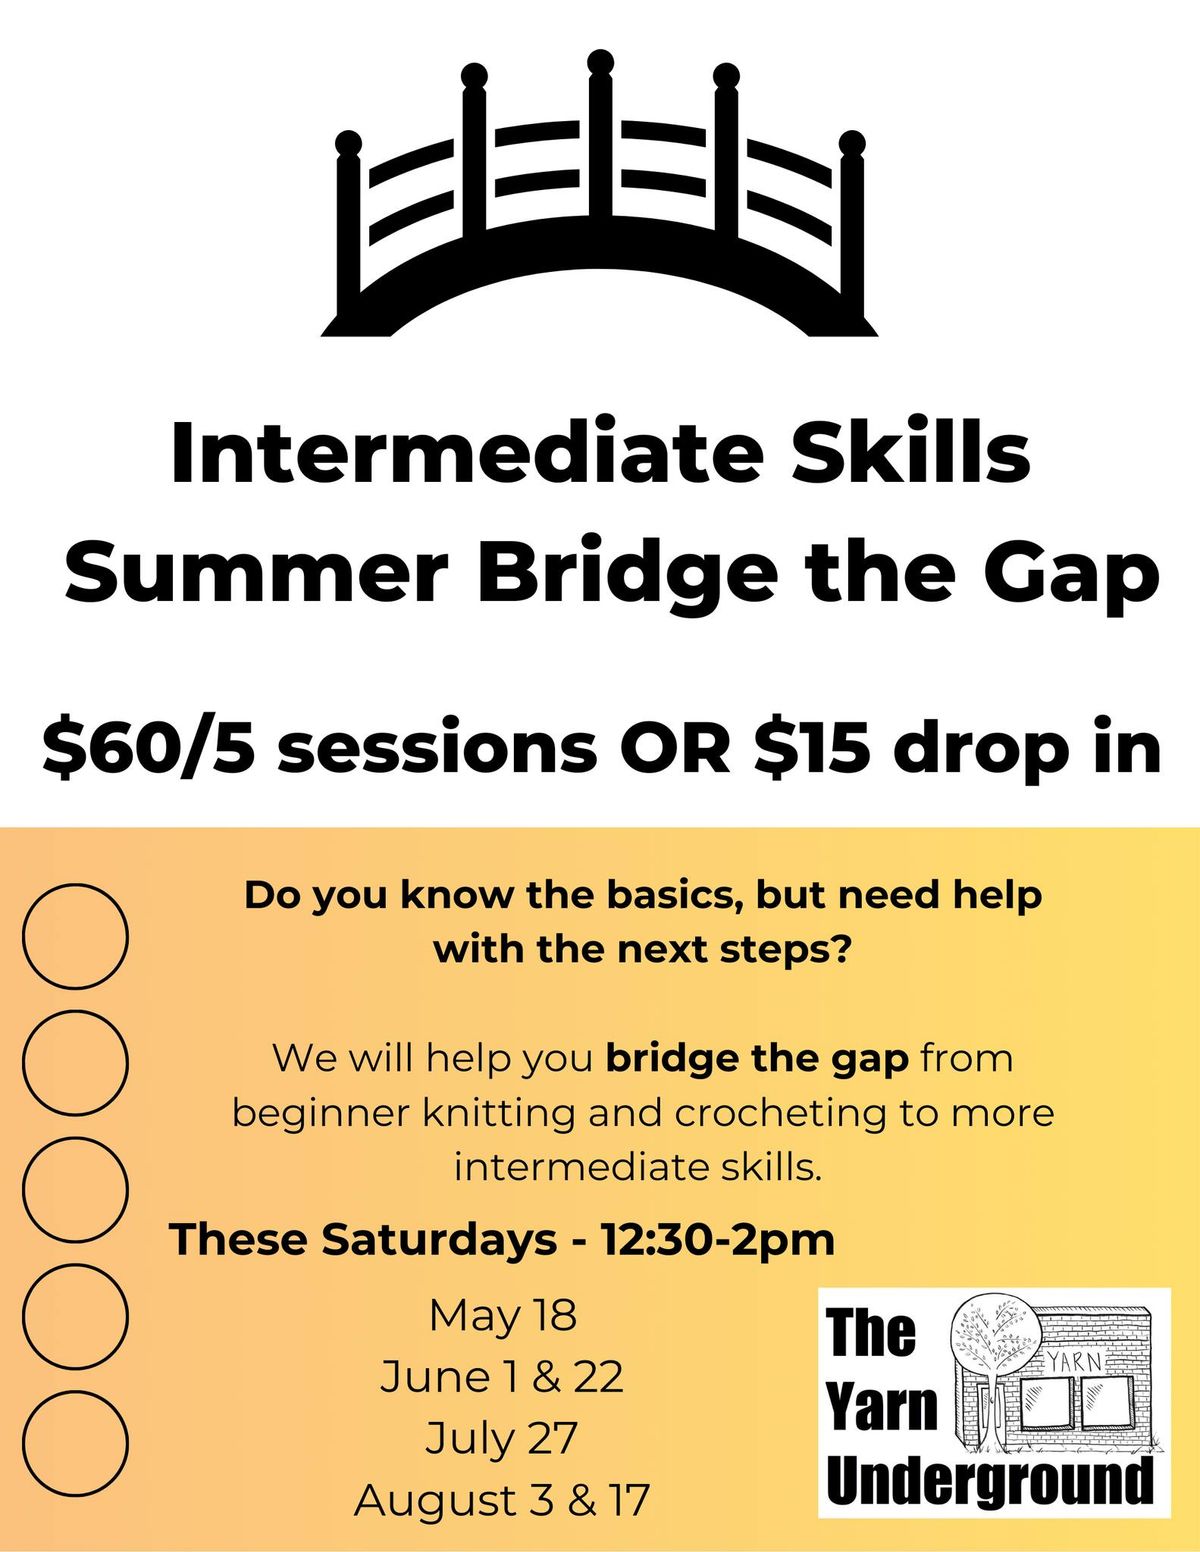 Intermediate Skills - Bridge the Gap Class June 22